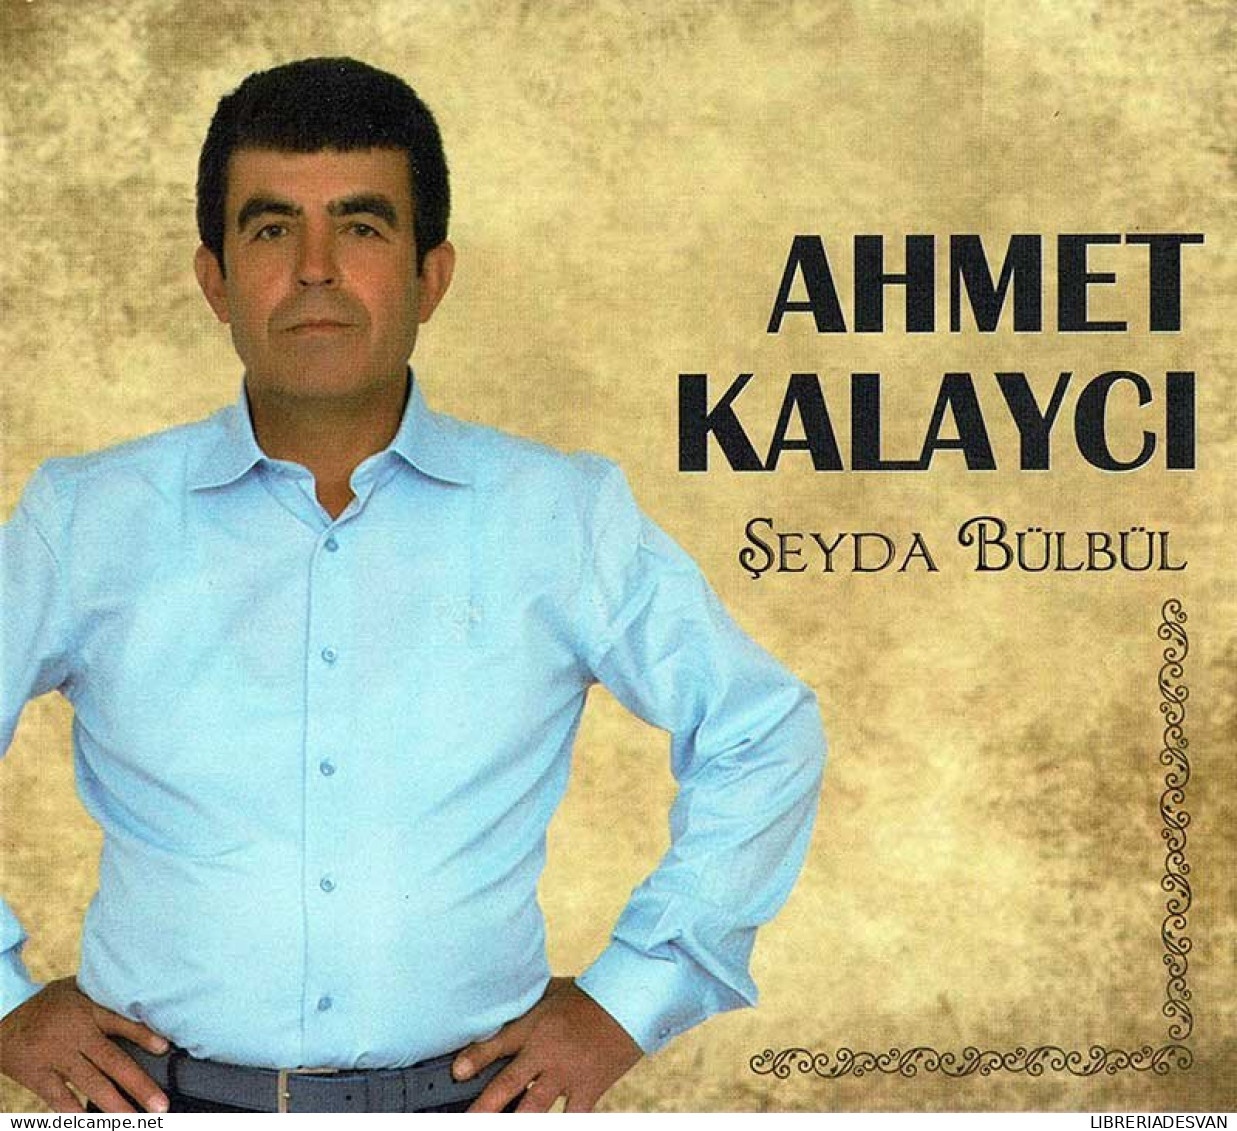 Ahmet Kalayci - Seyda Bülbül. CD - Country & Folk